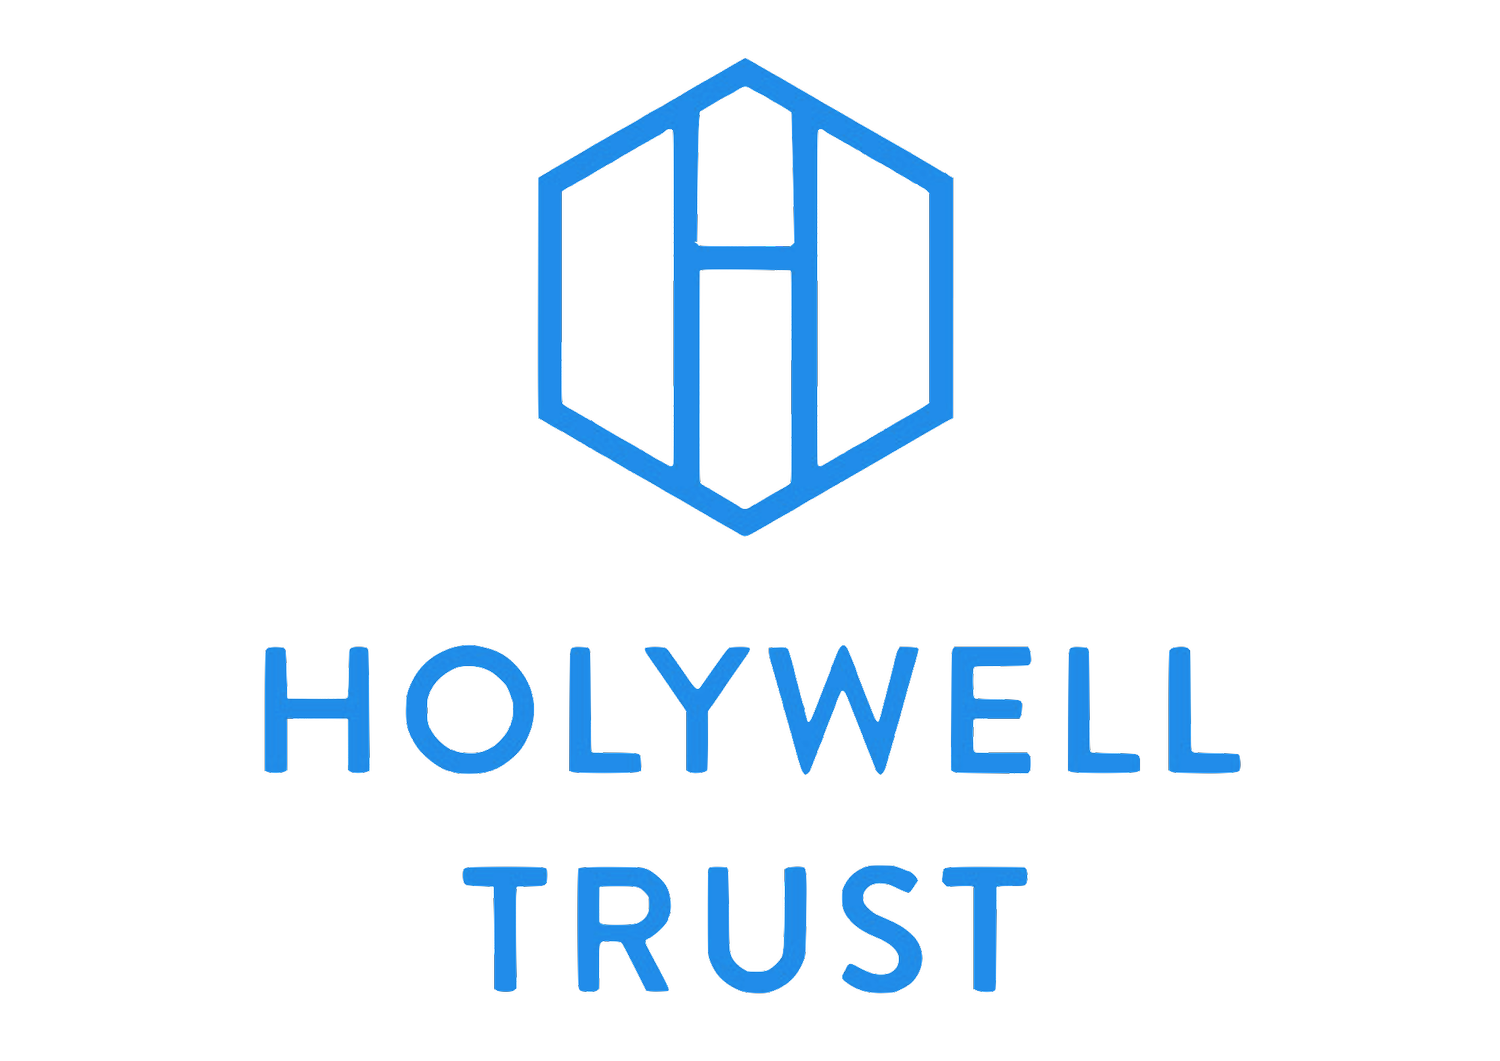 Holywell Trust